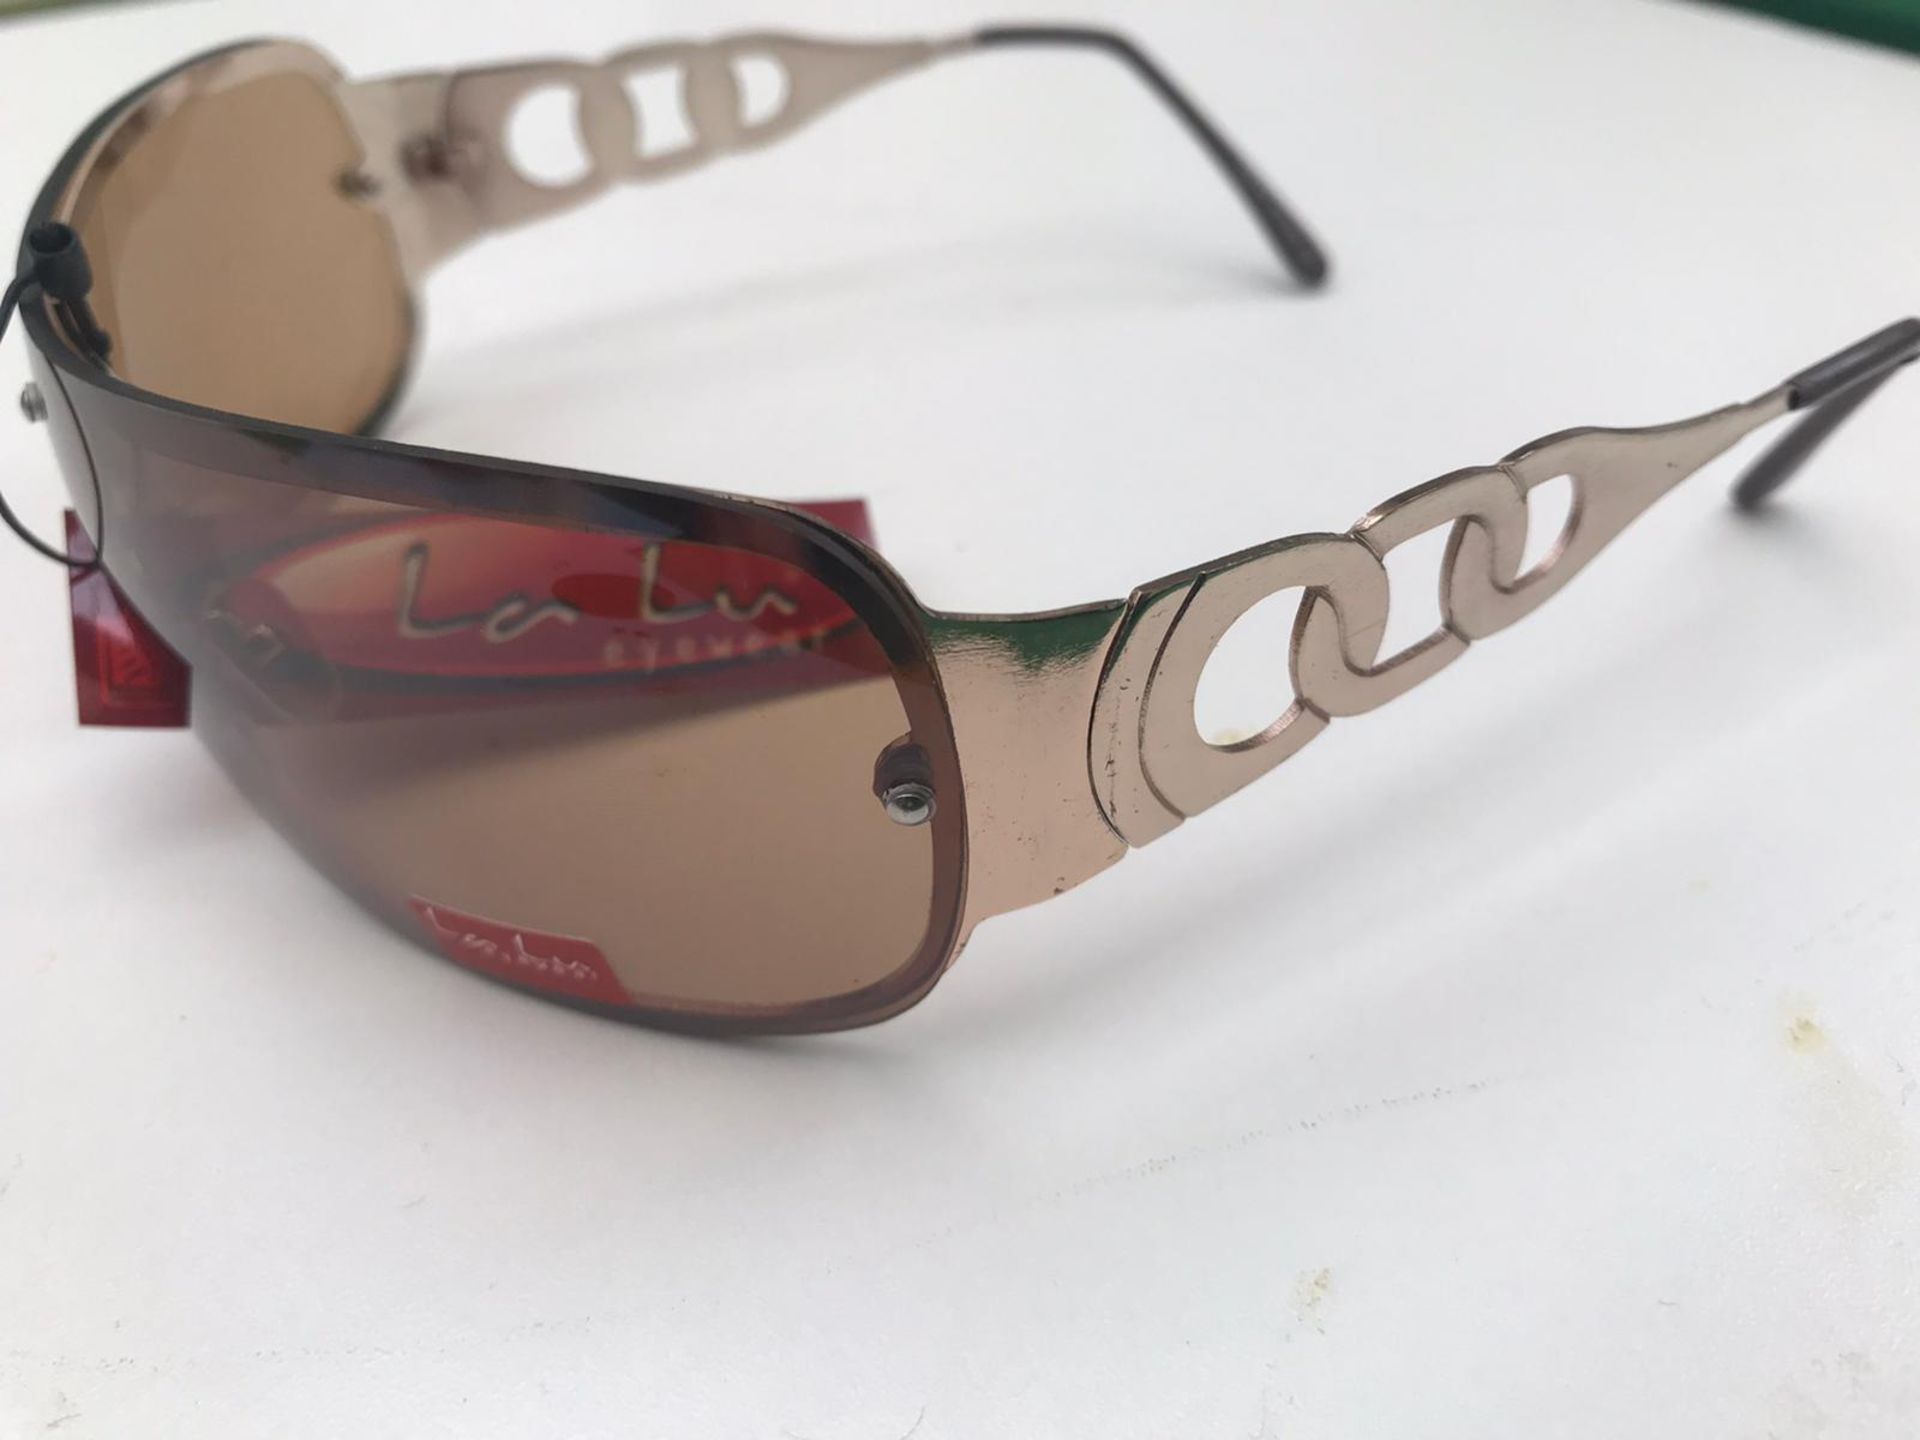 500 x La Lu Branded Sunglasses | Various Styles - Image 3 of 32